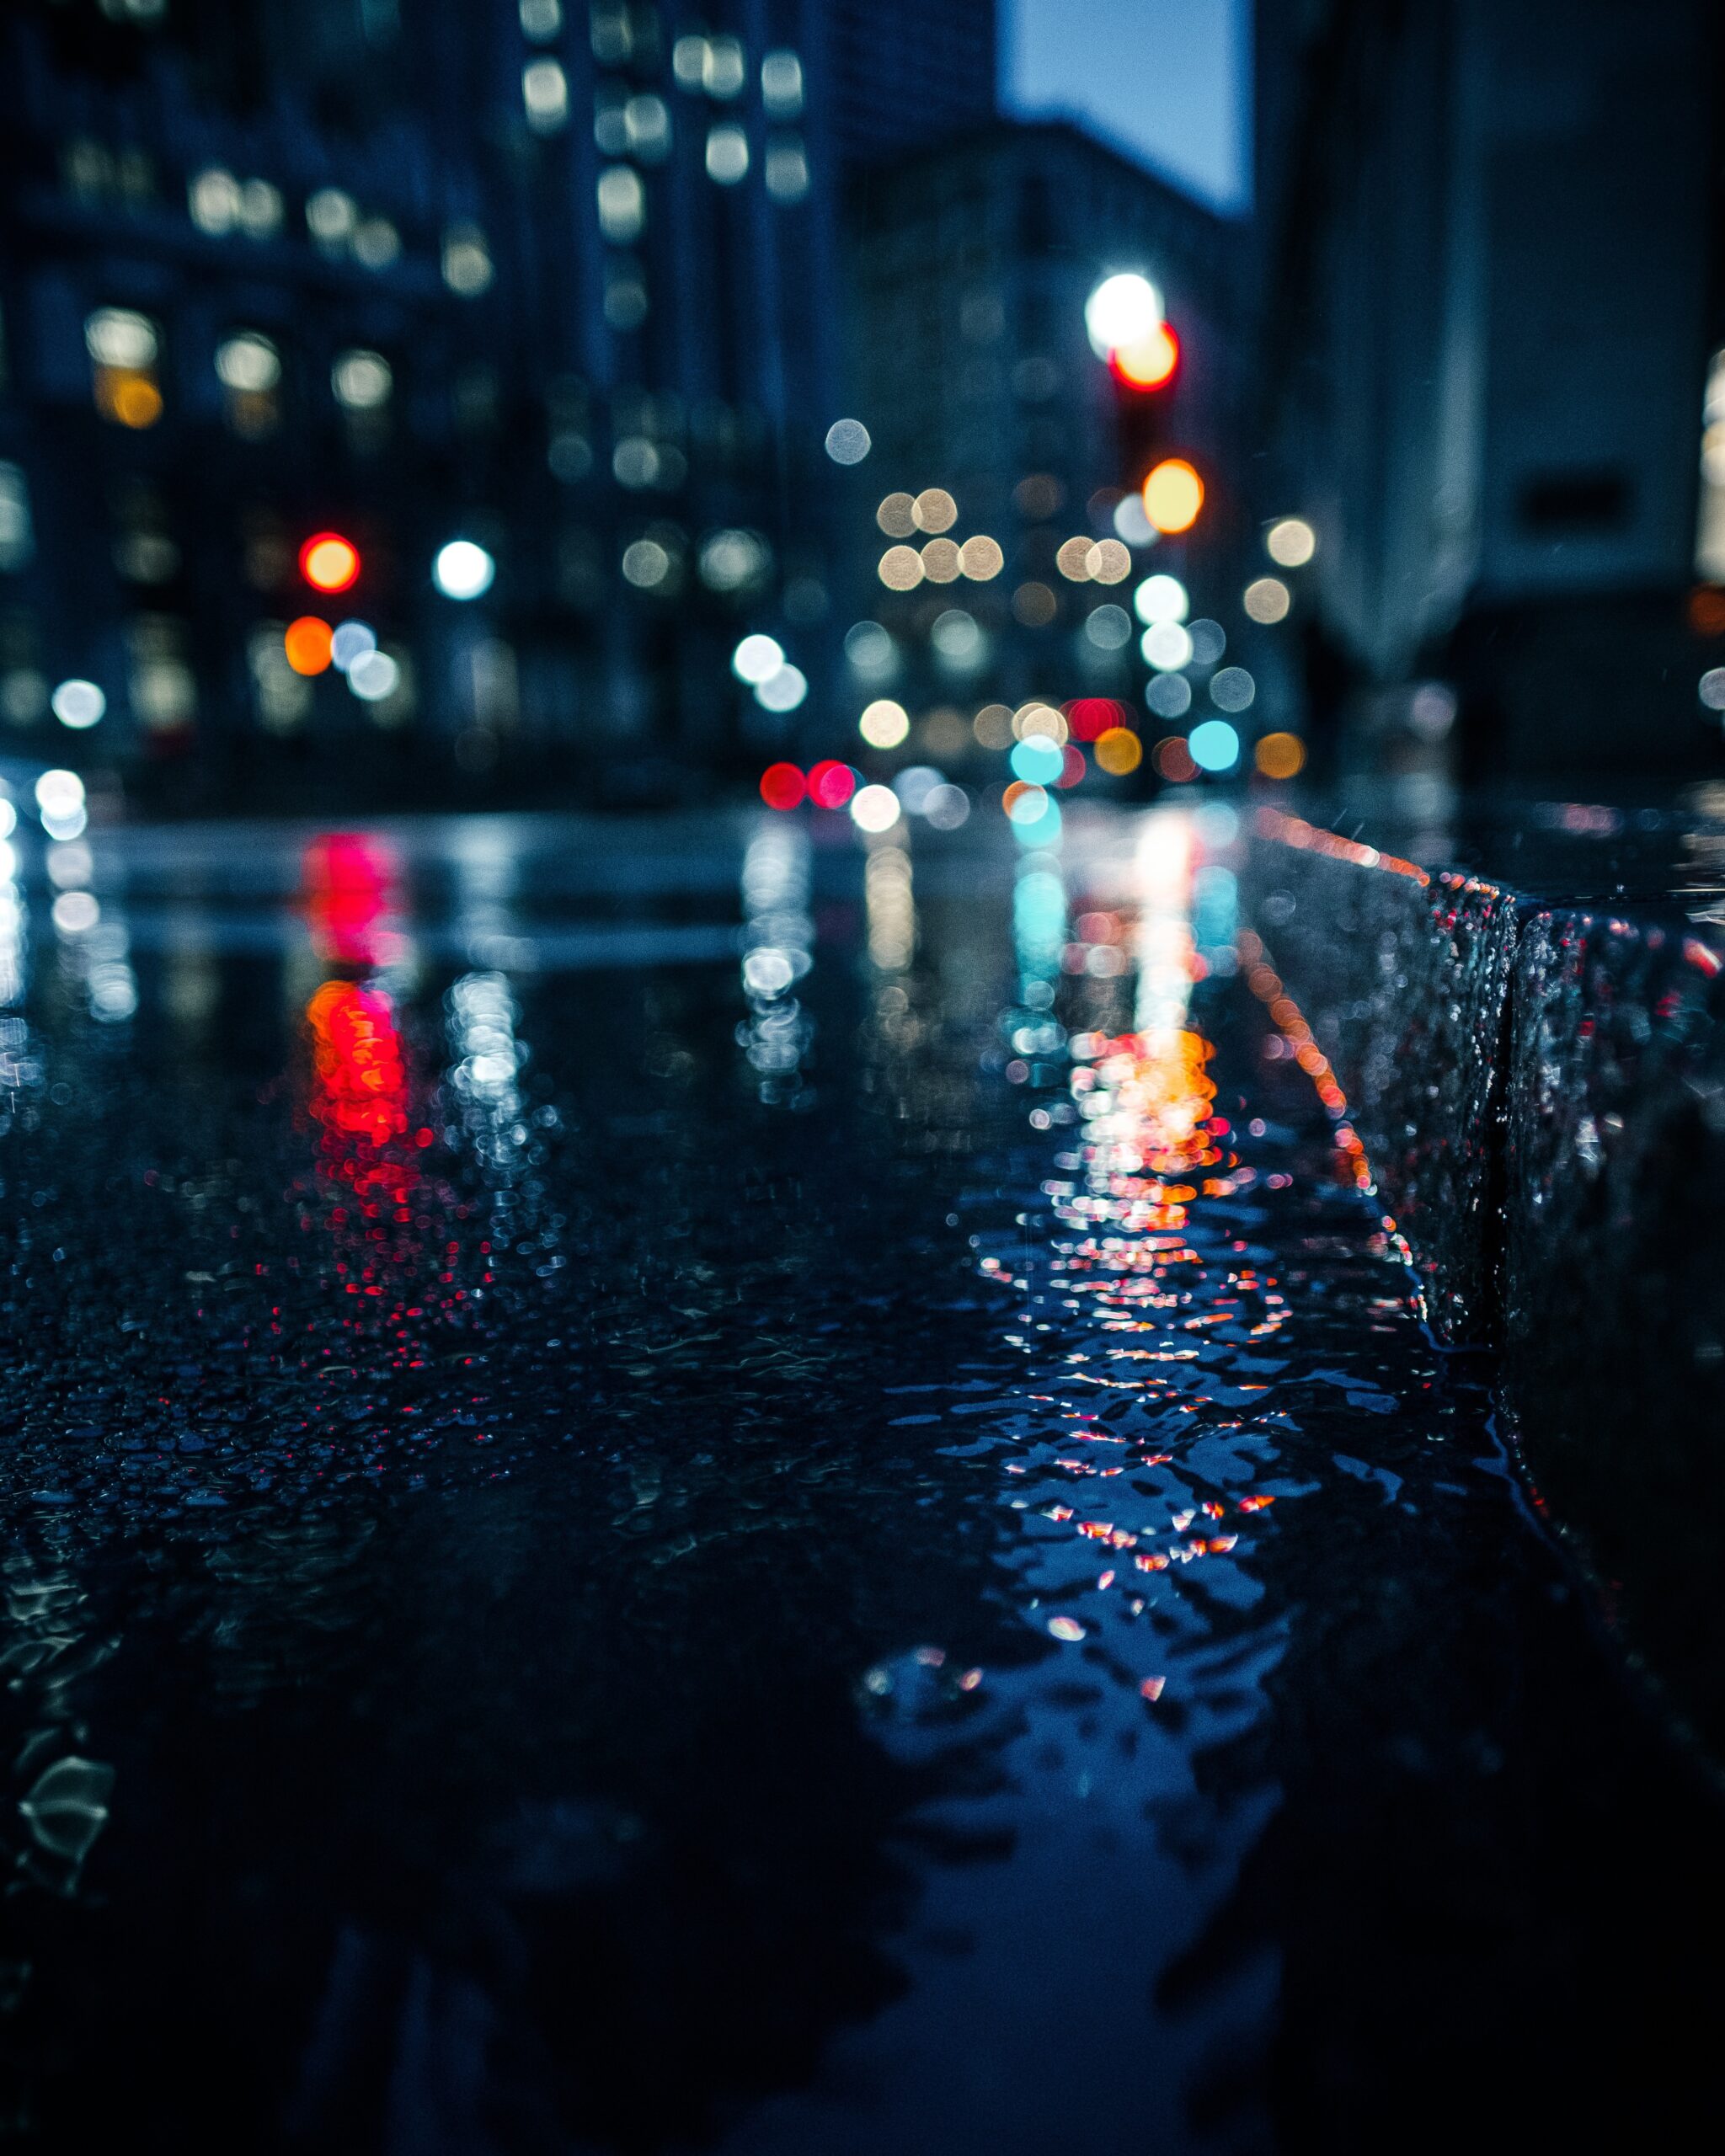 Omaha streetlights reflected on wet asphalt pavement